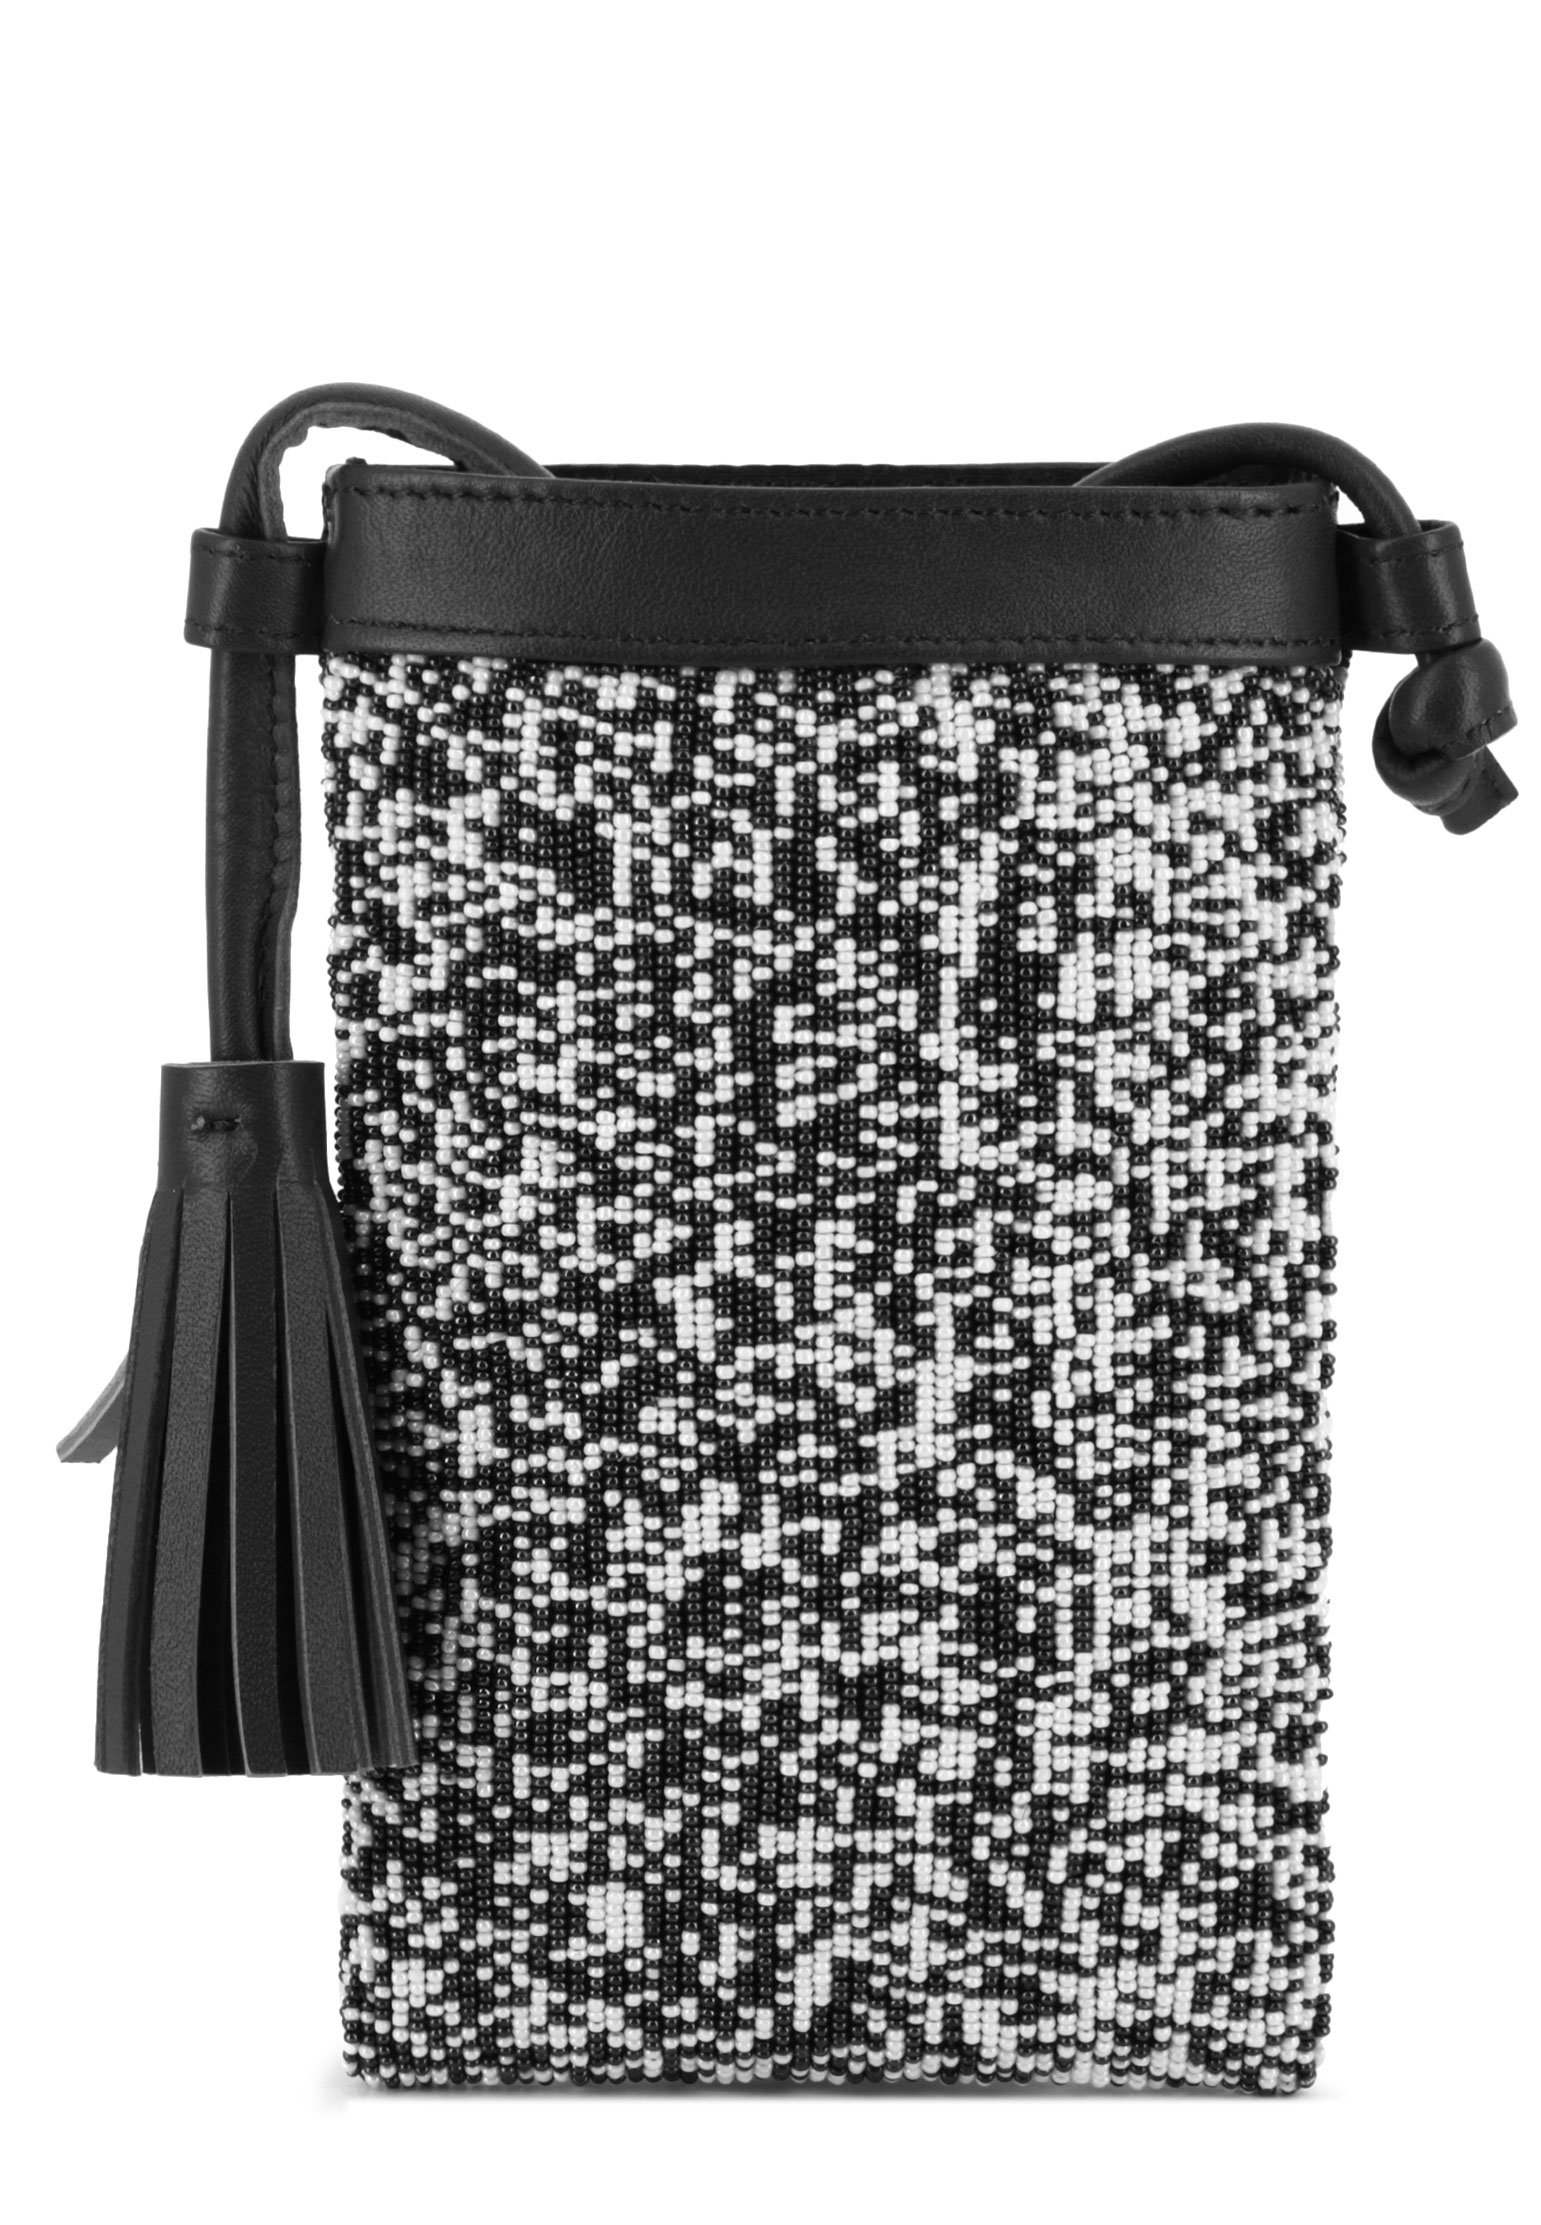 Bag DE SIENA Color: black (Code: 2340) in online store Allure